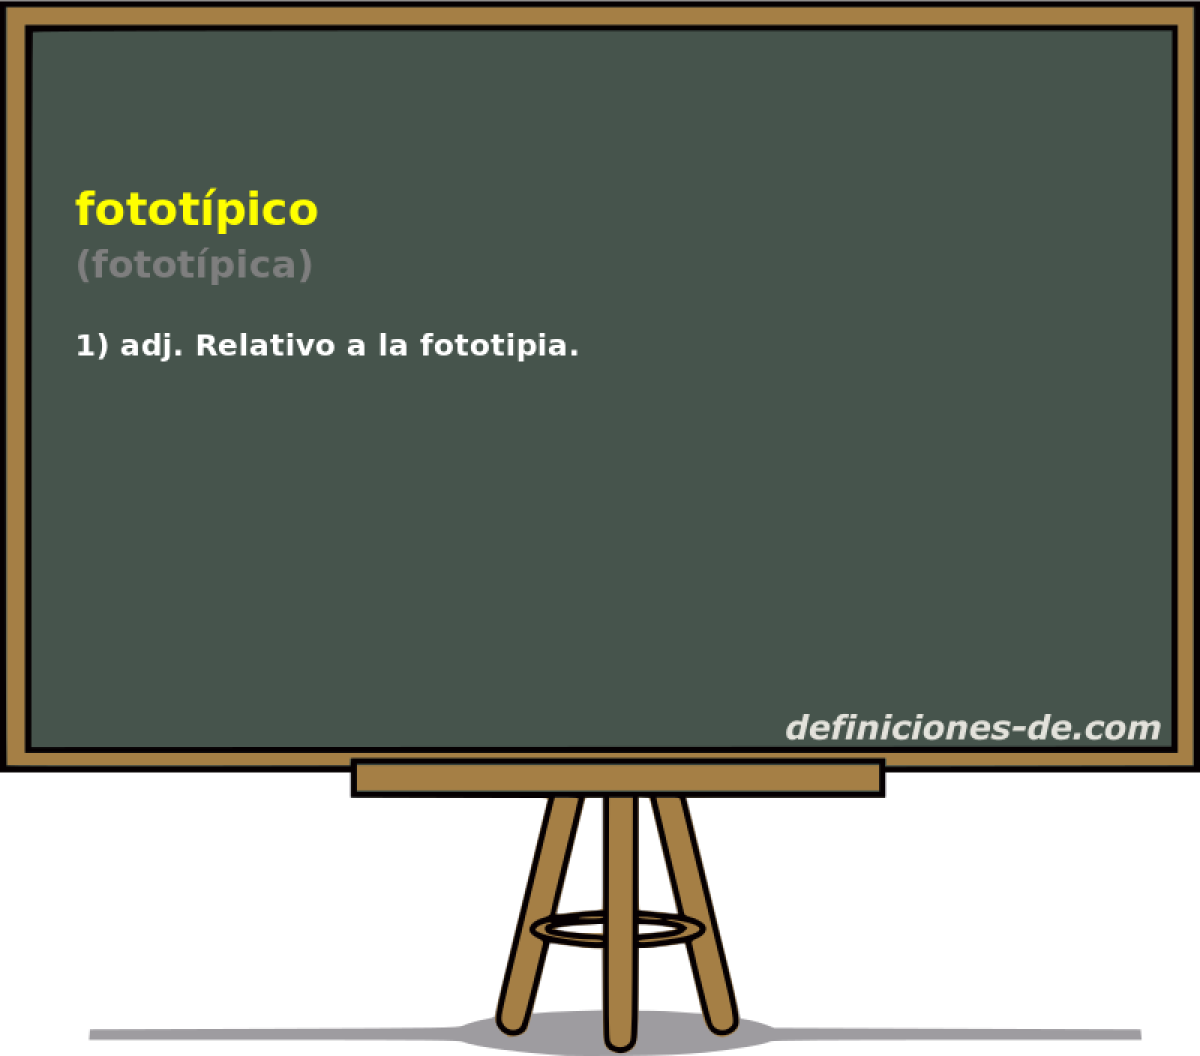 fototpico (fototpica)